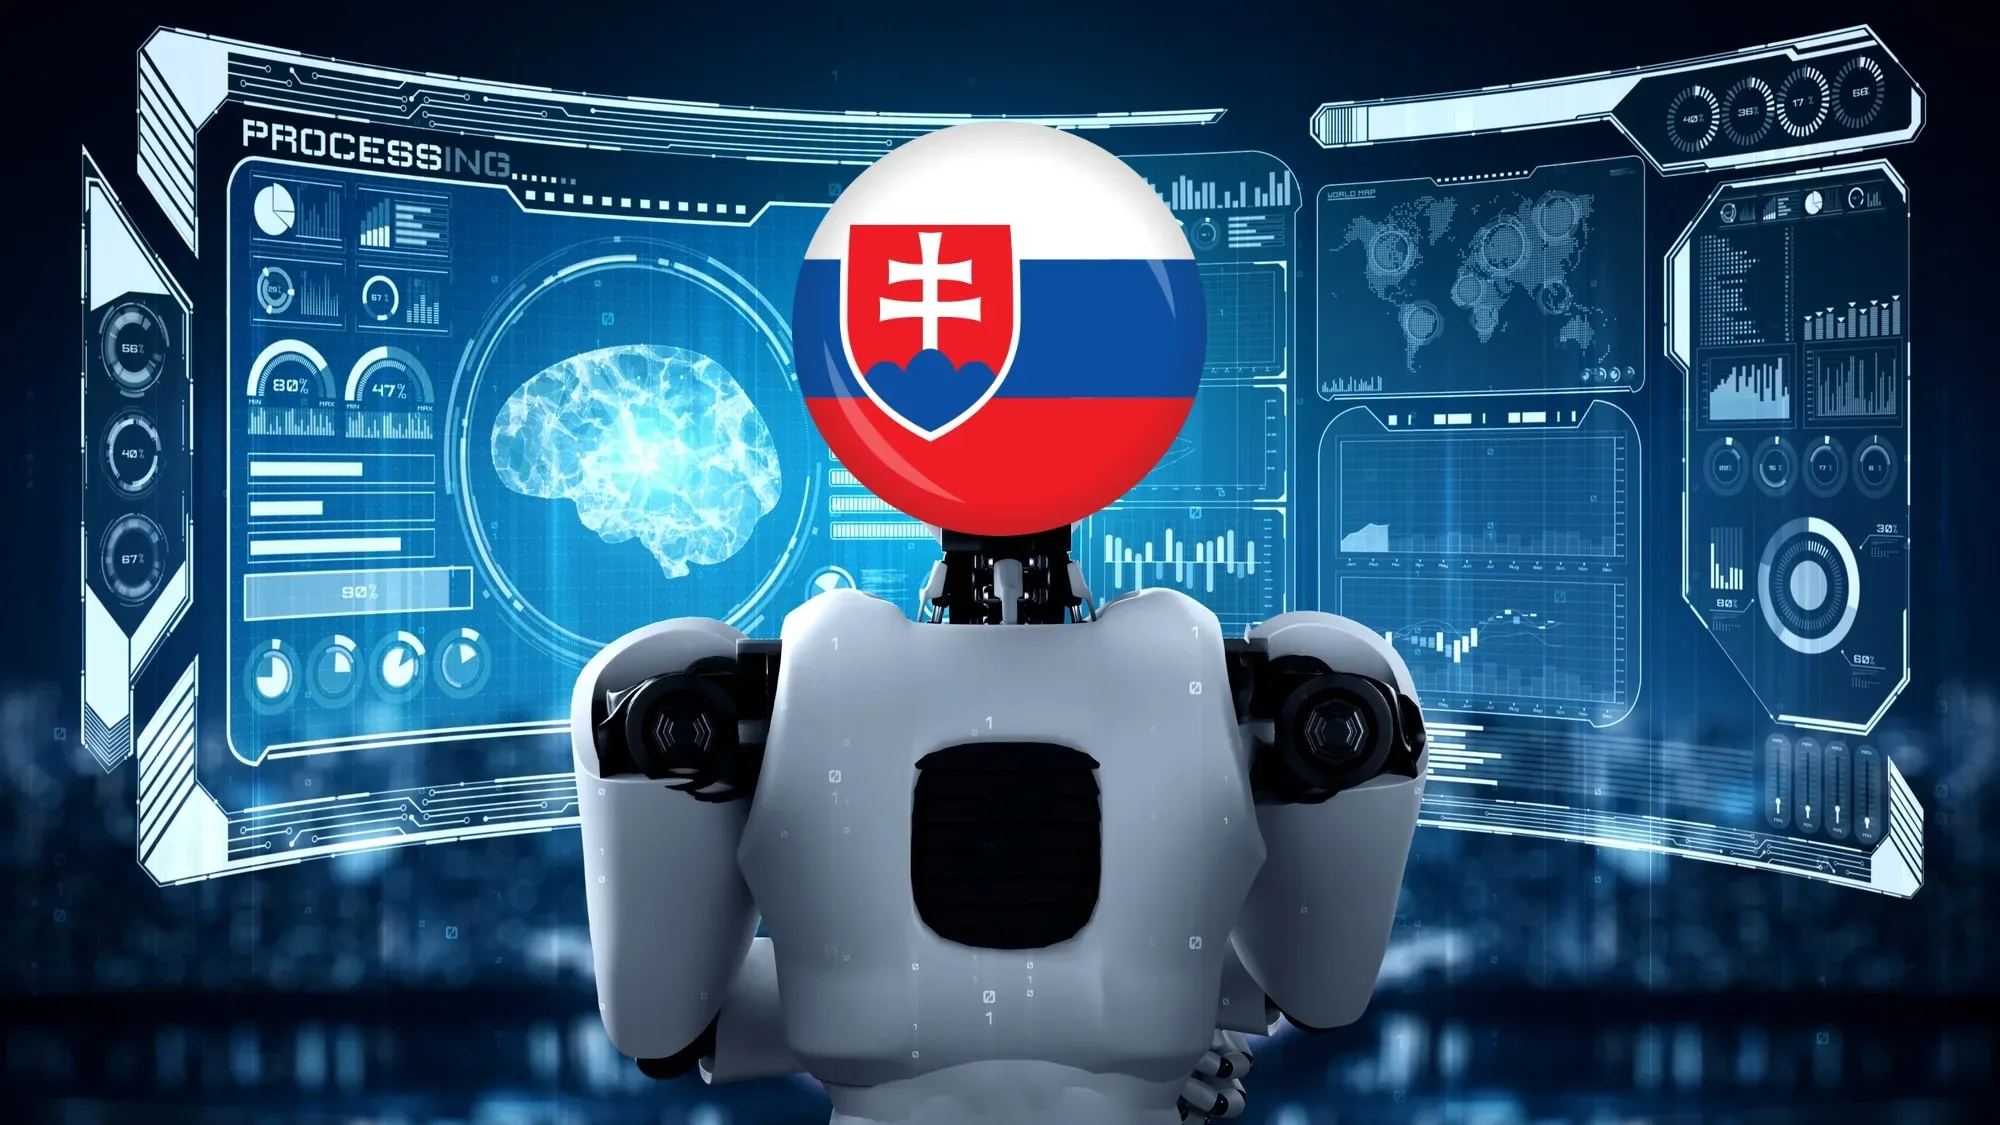 umela inteligencia ai slovensko jpg webp